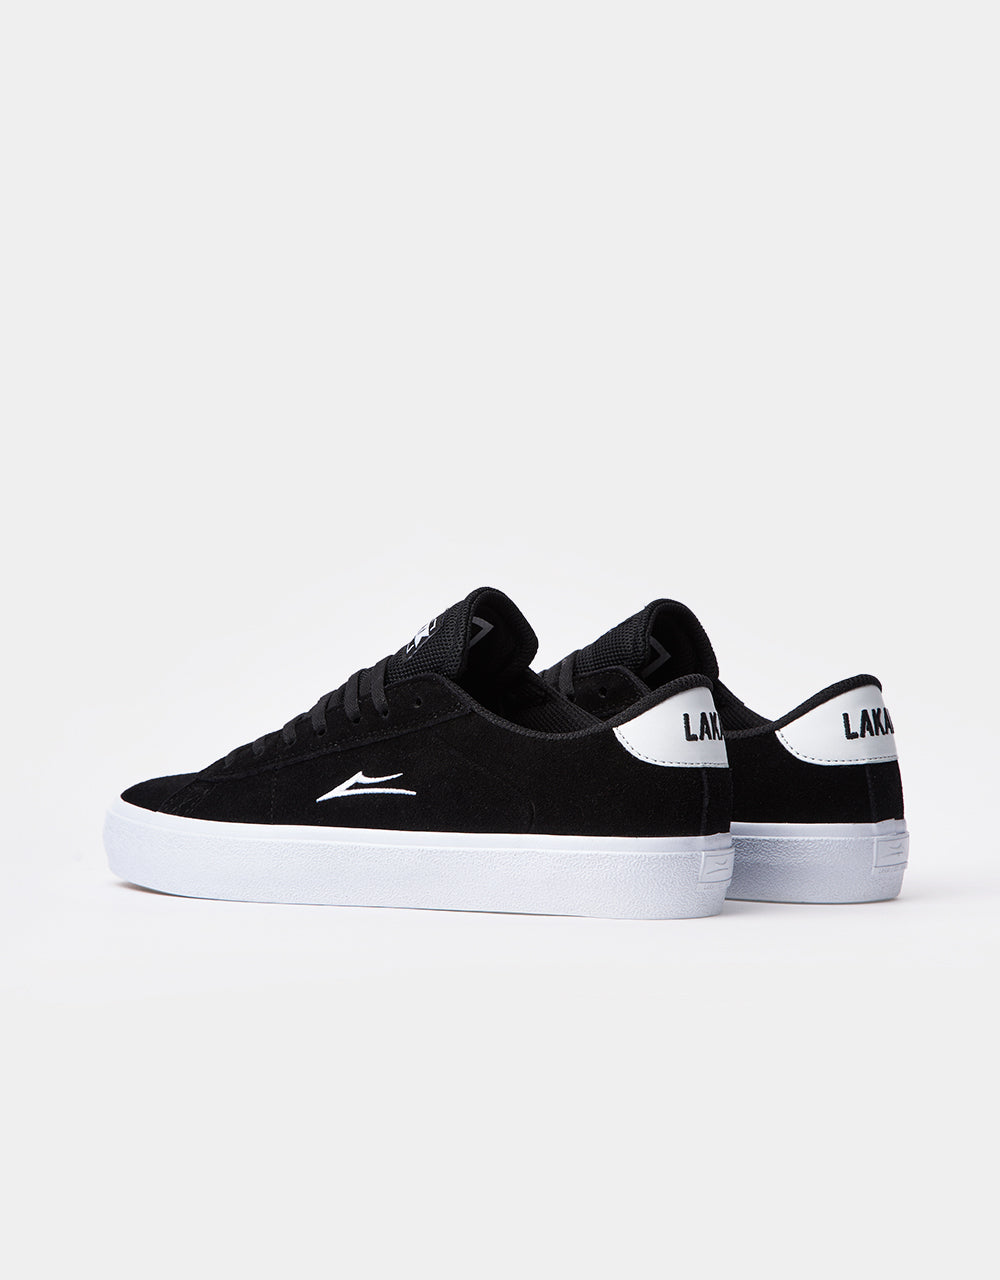 Lakai Newport Skate Shoes - Black Suede